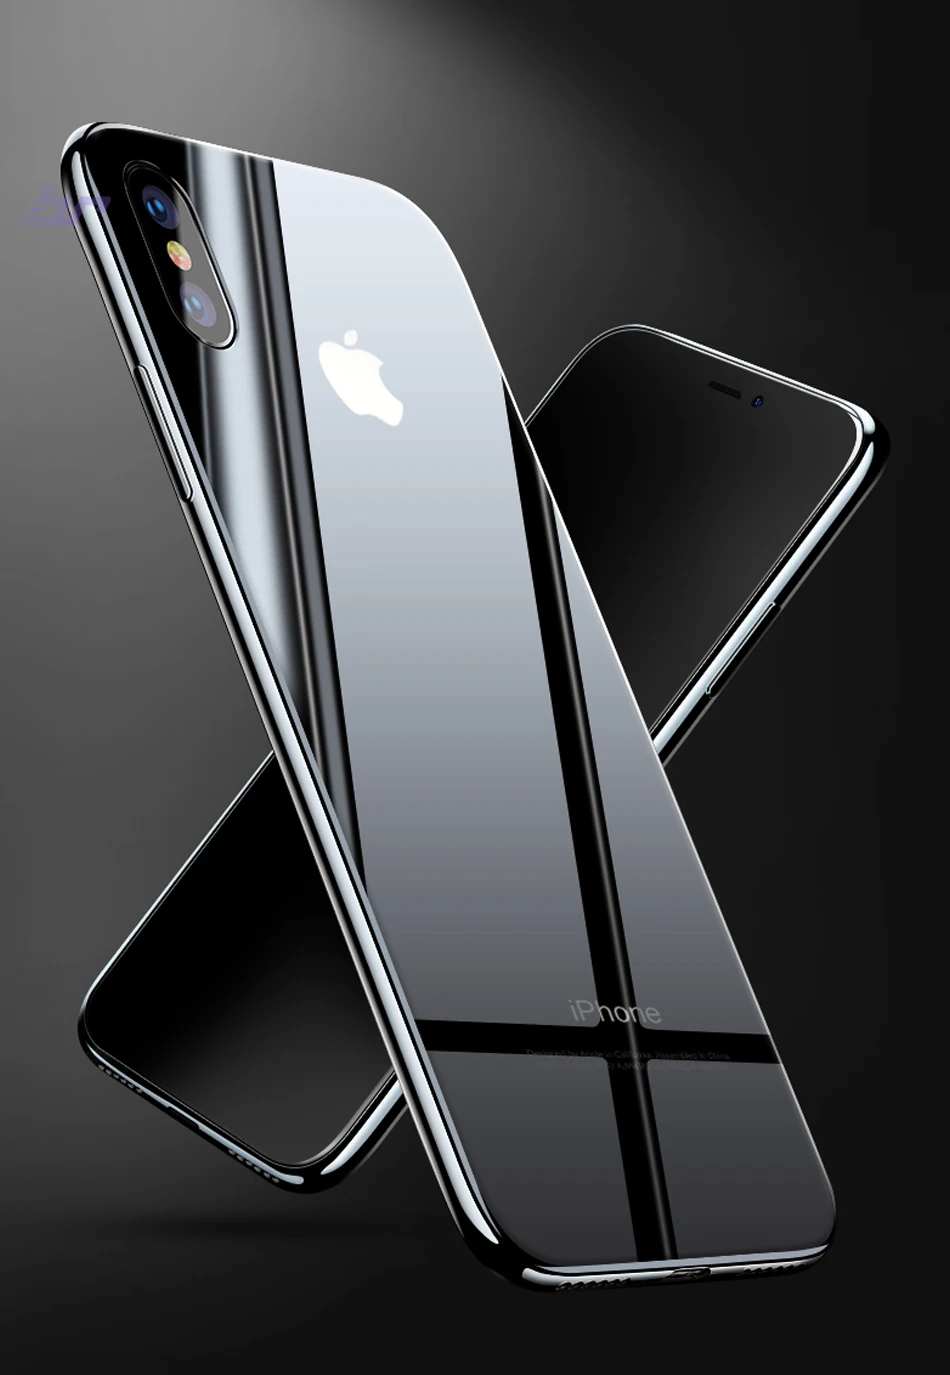 IHaitun роскошный стеклянный чехол для iPhone XS Чехлы для Max XR ультра тонкий прозрачный стеклянный чехол для iPhone 11 Pro Max X 10 7 8 Plus Мягкий